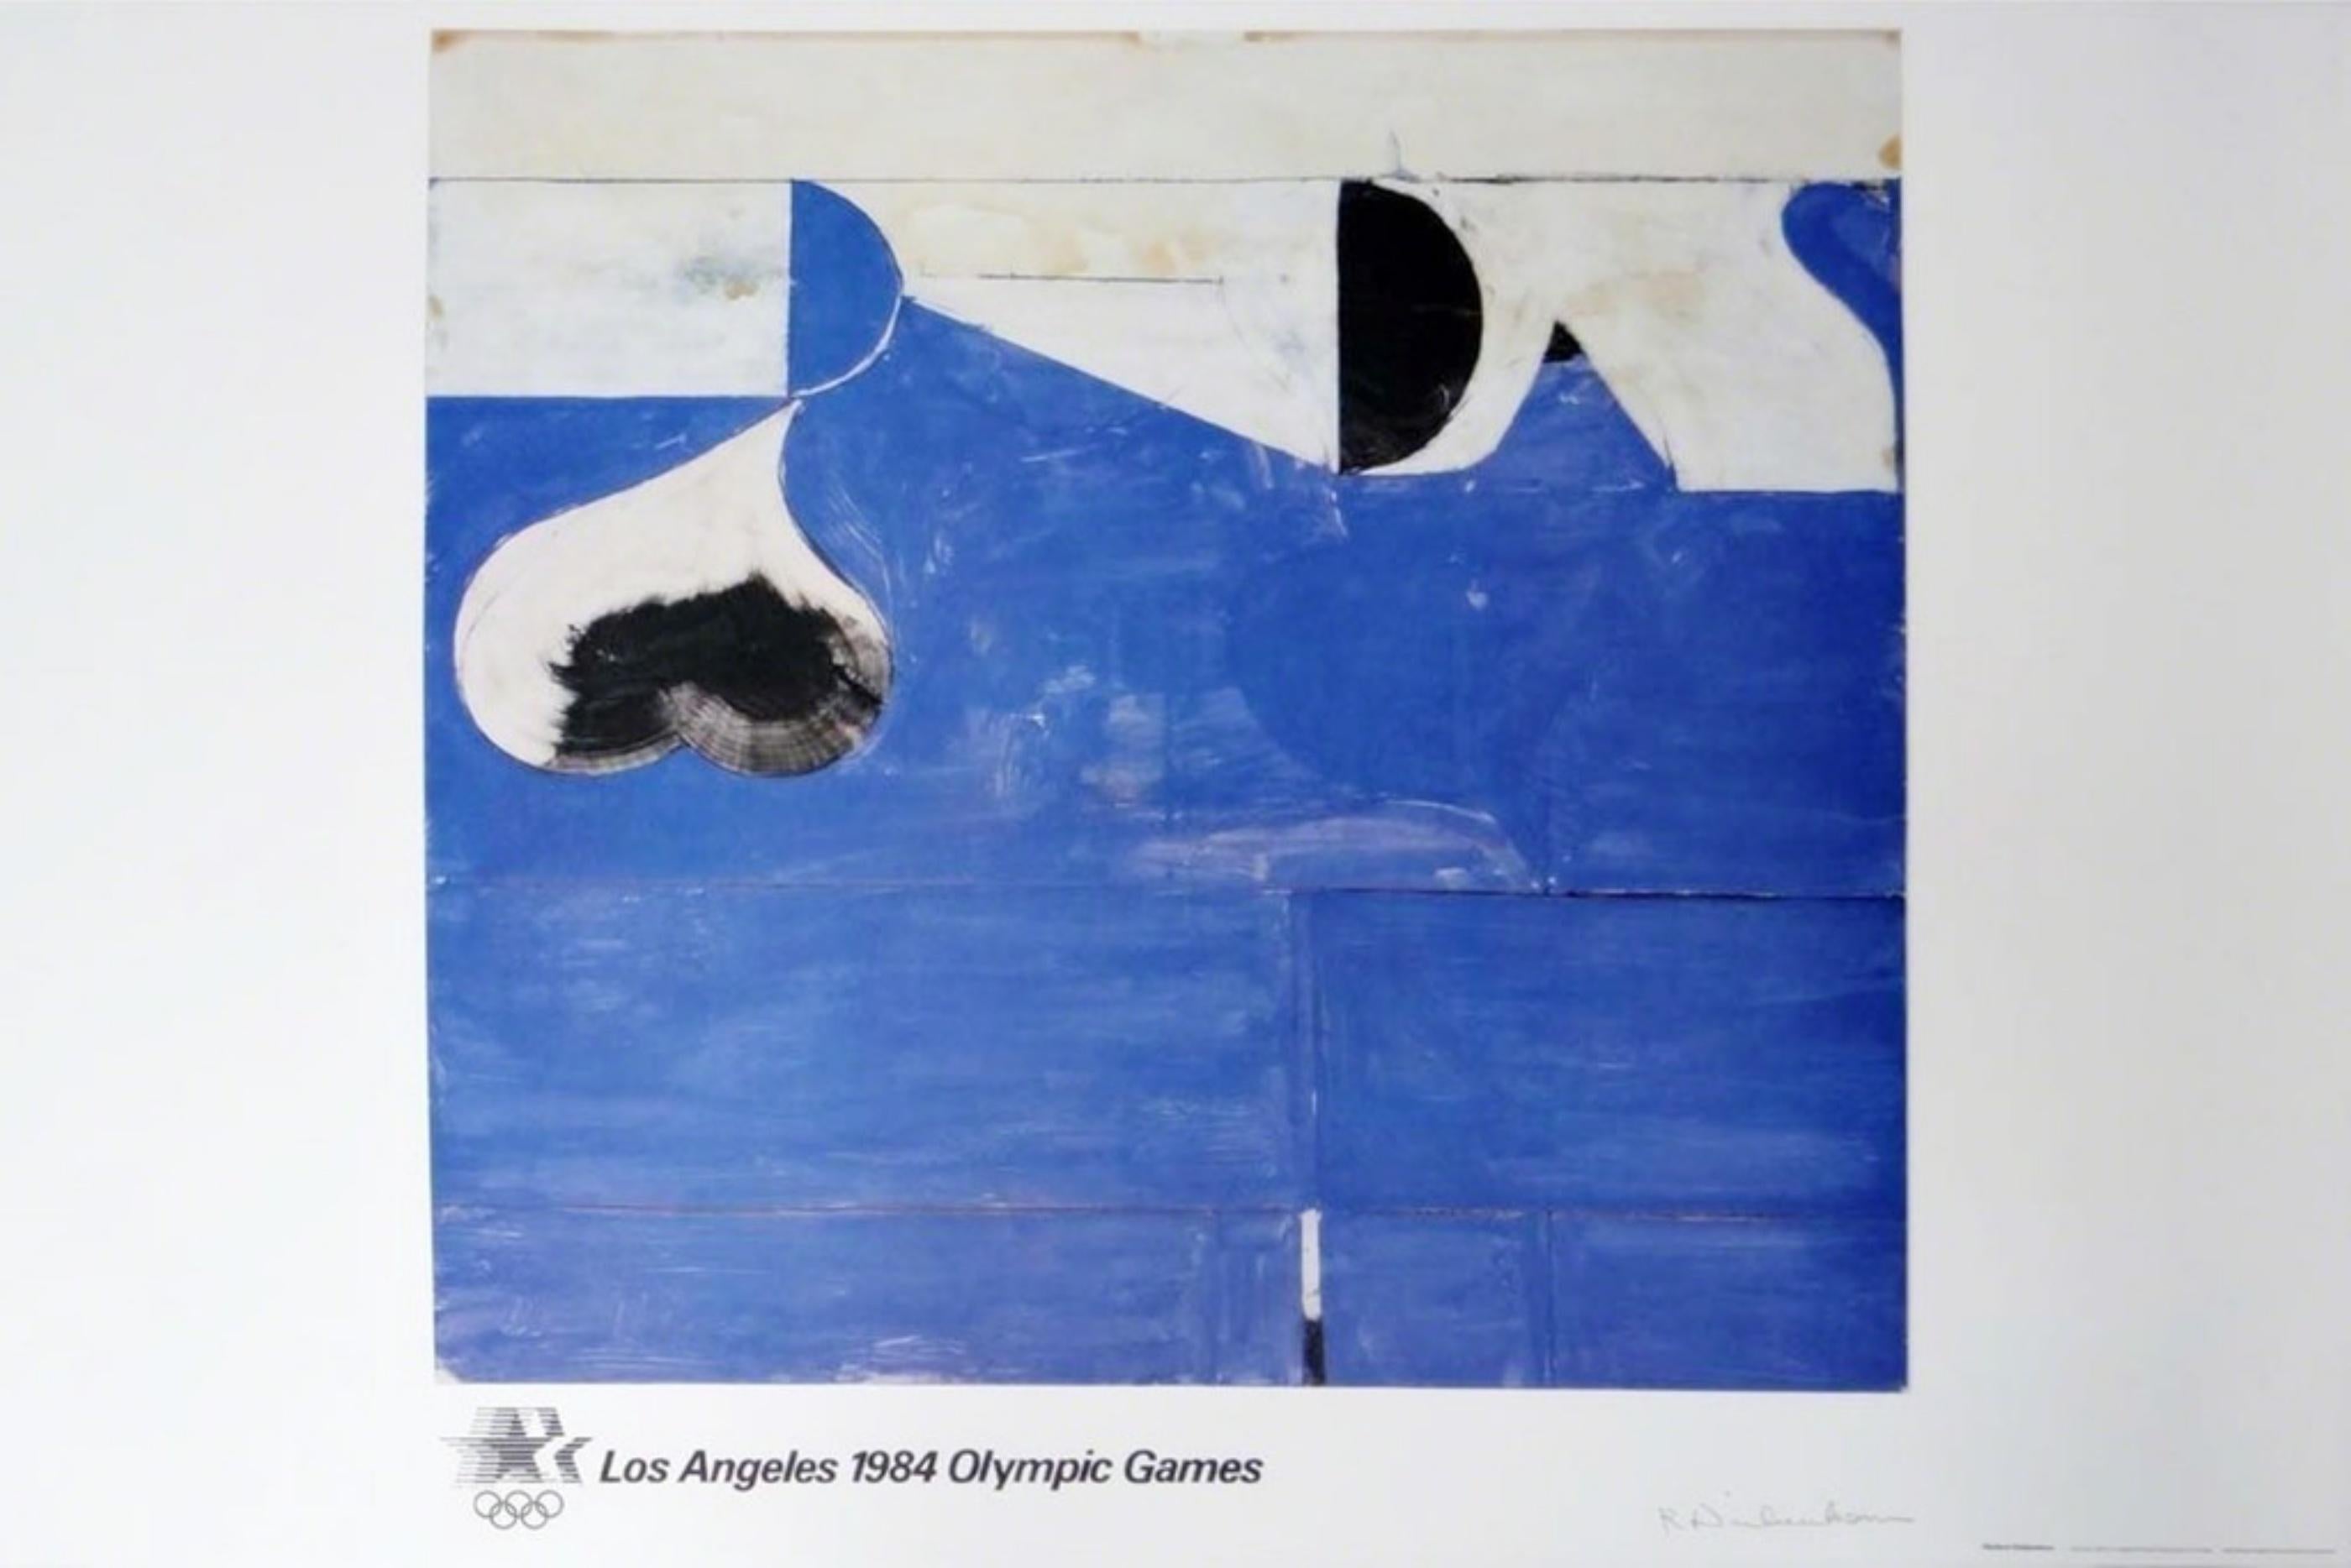 Olympic-Lithographie der Olympischen Spiele 1984, limitierte Auflage SIGNED Deluxe Edition mit offiziellem COA